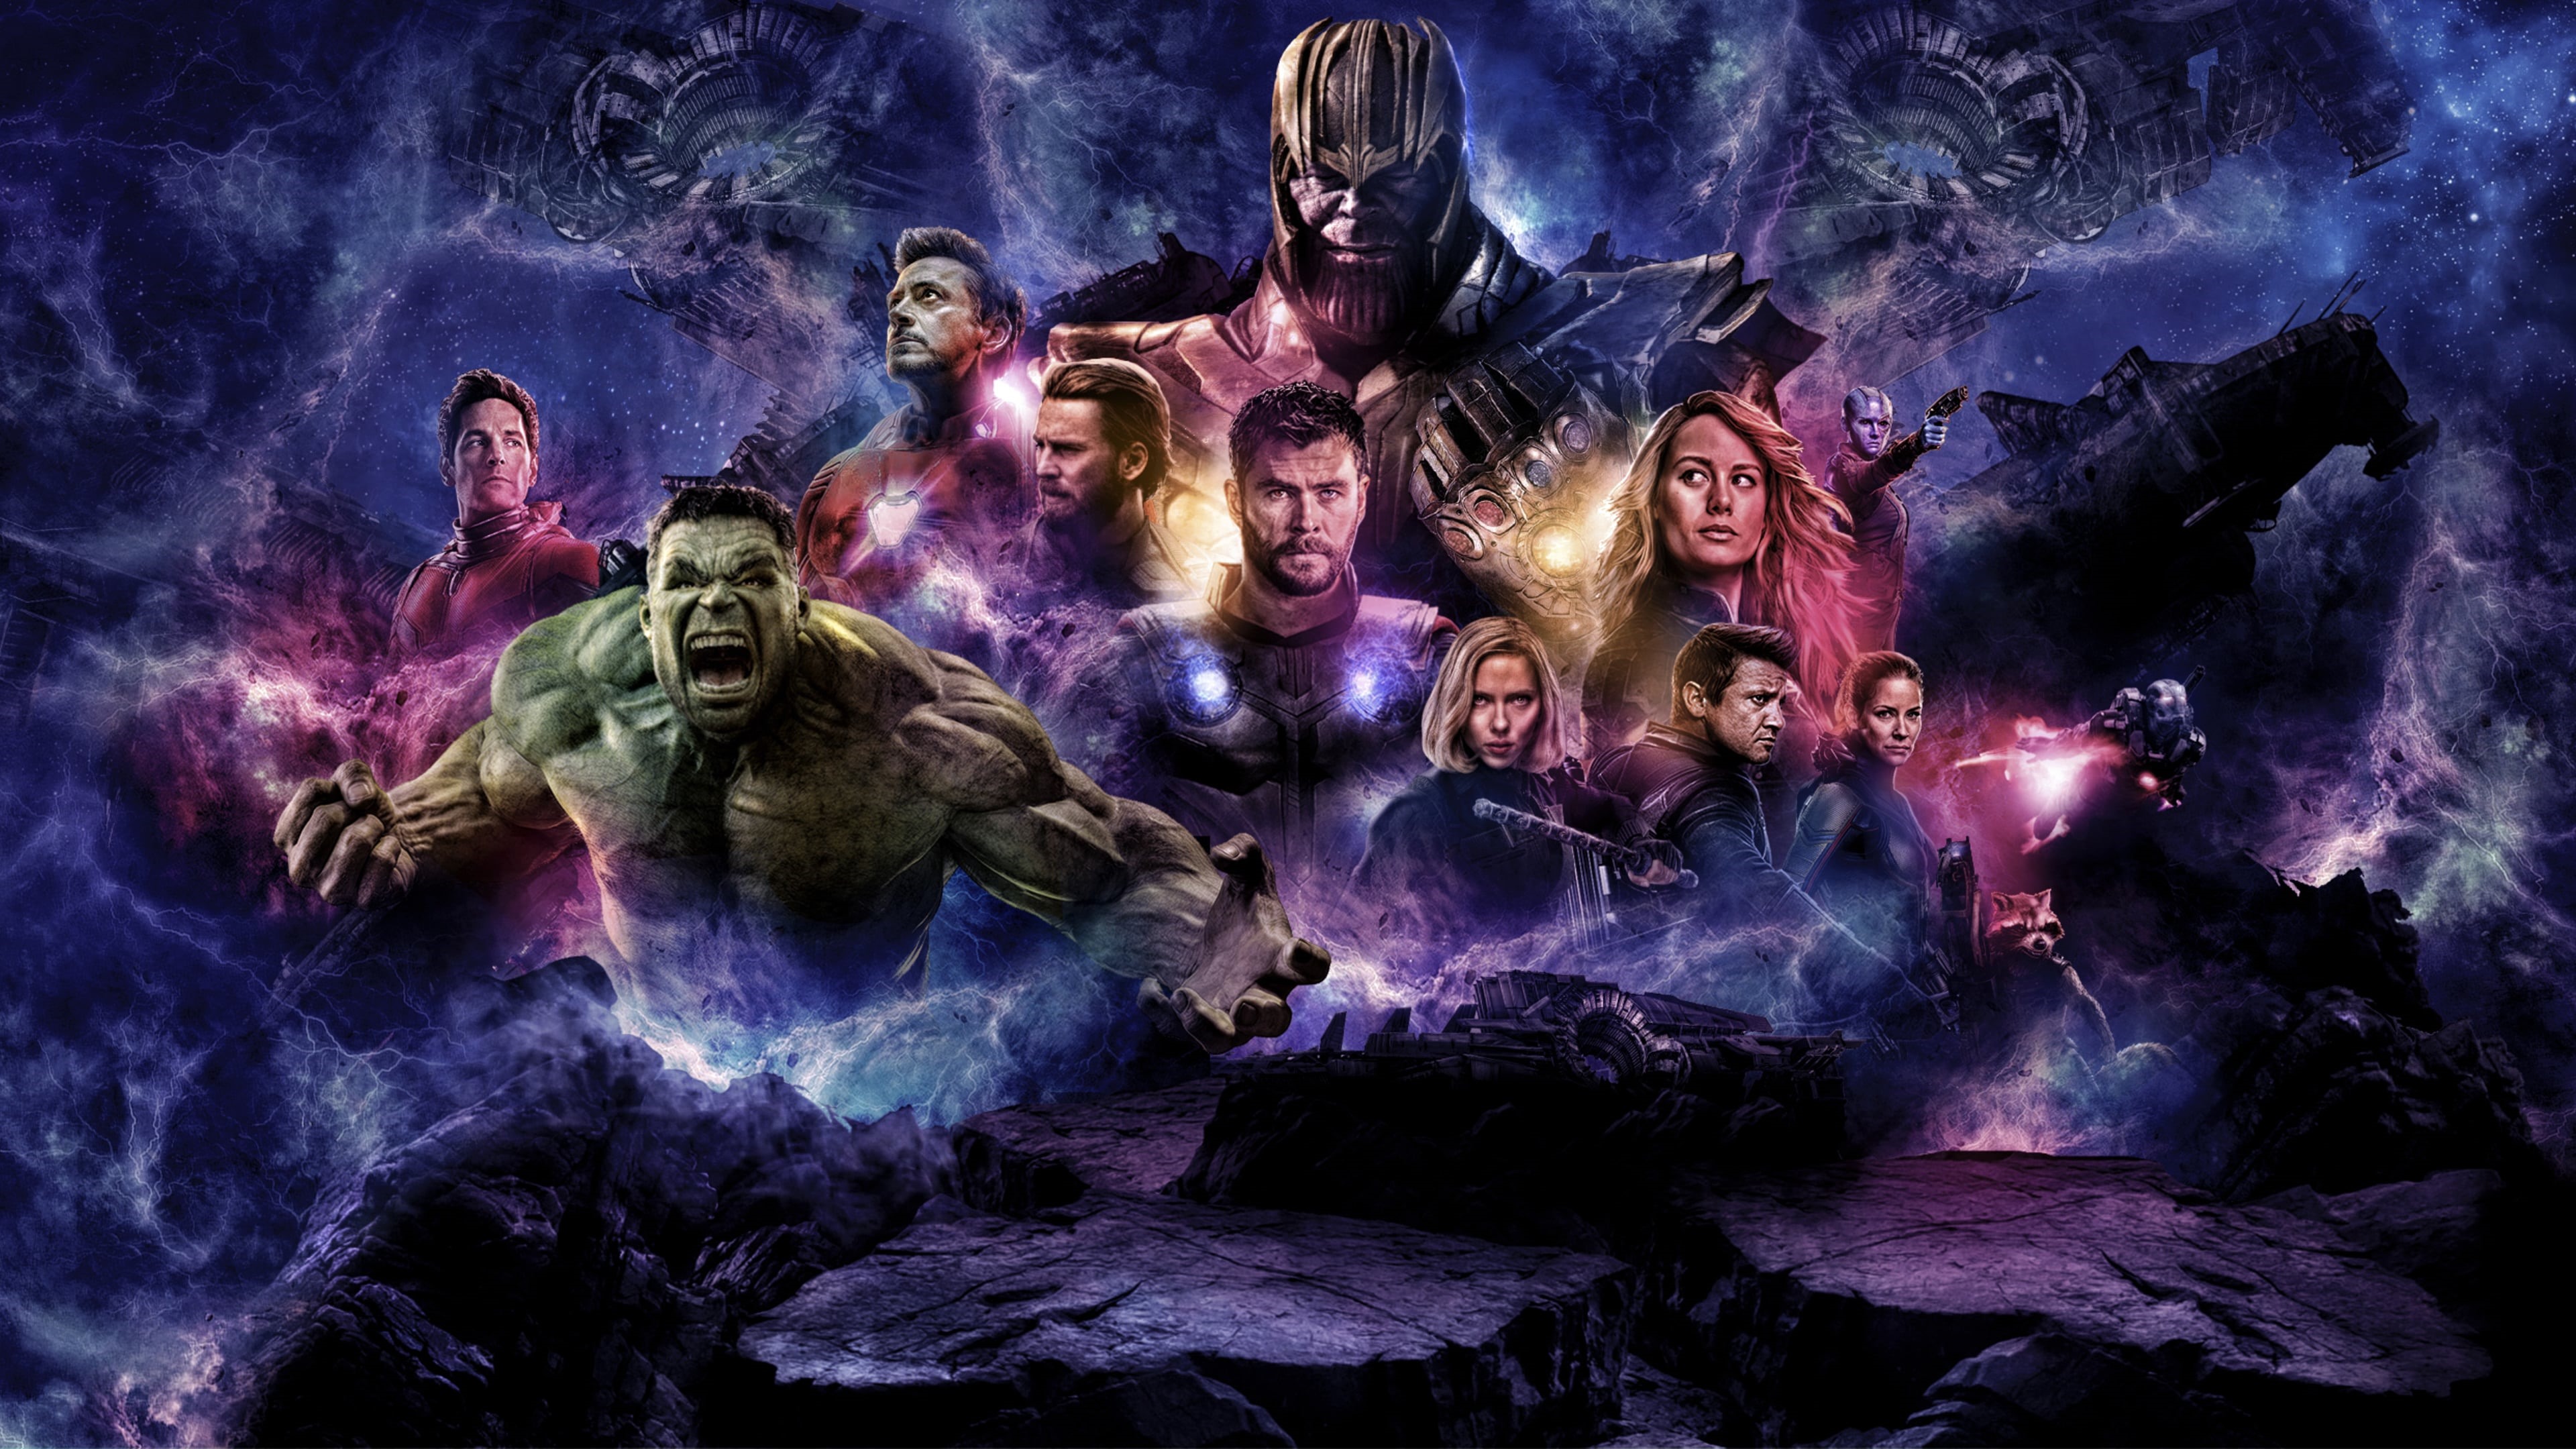 Wallpaper Avengers: Endgame, DC Comics movie 2019 3840x2160 UHD 4K